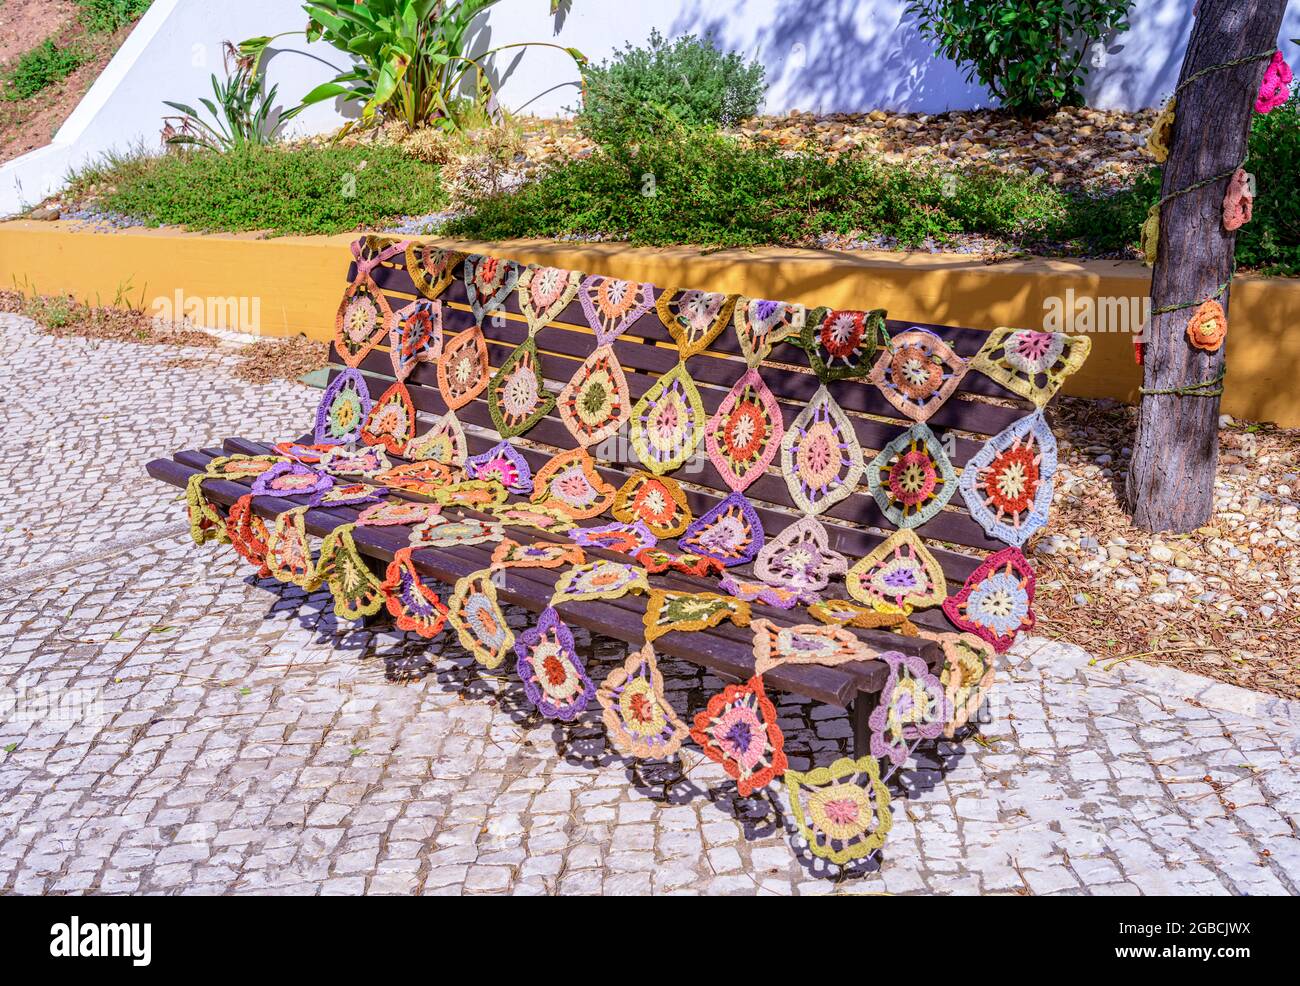 Crochet seat bench cover placed on a public bench São Bartolomeu do sul east Algarve Portugal Stock Photo